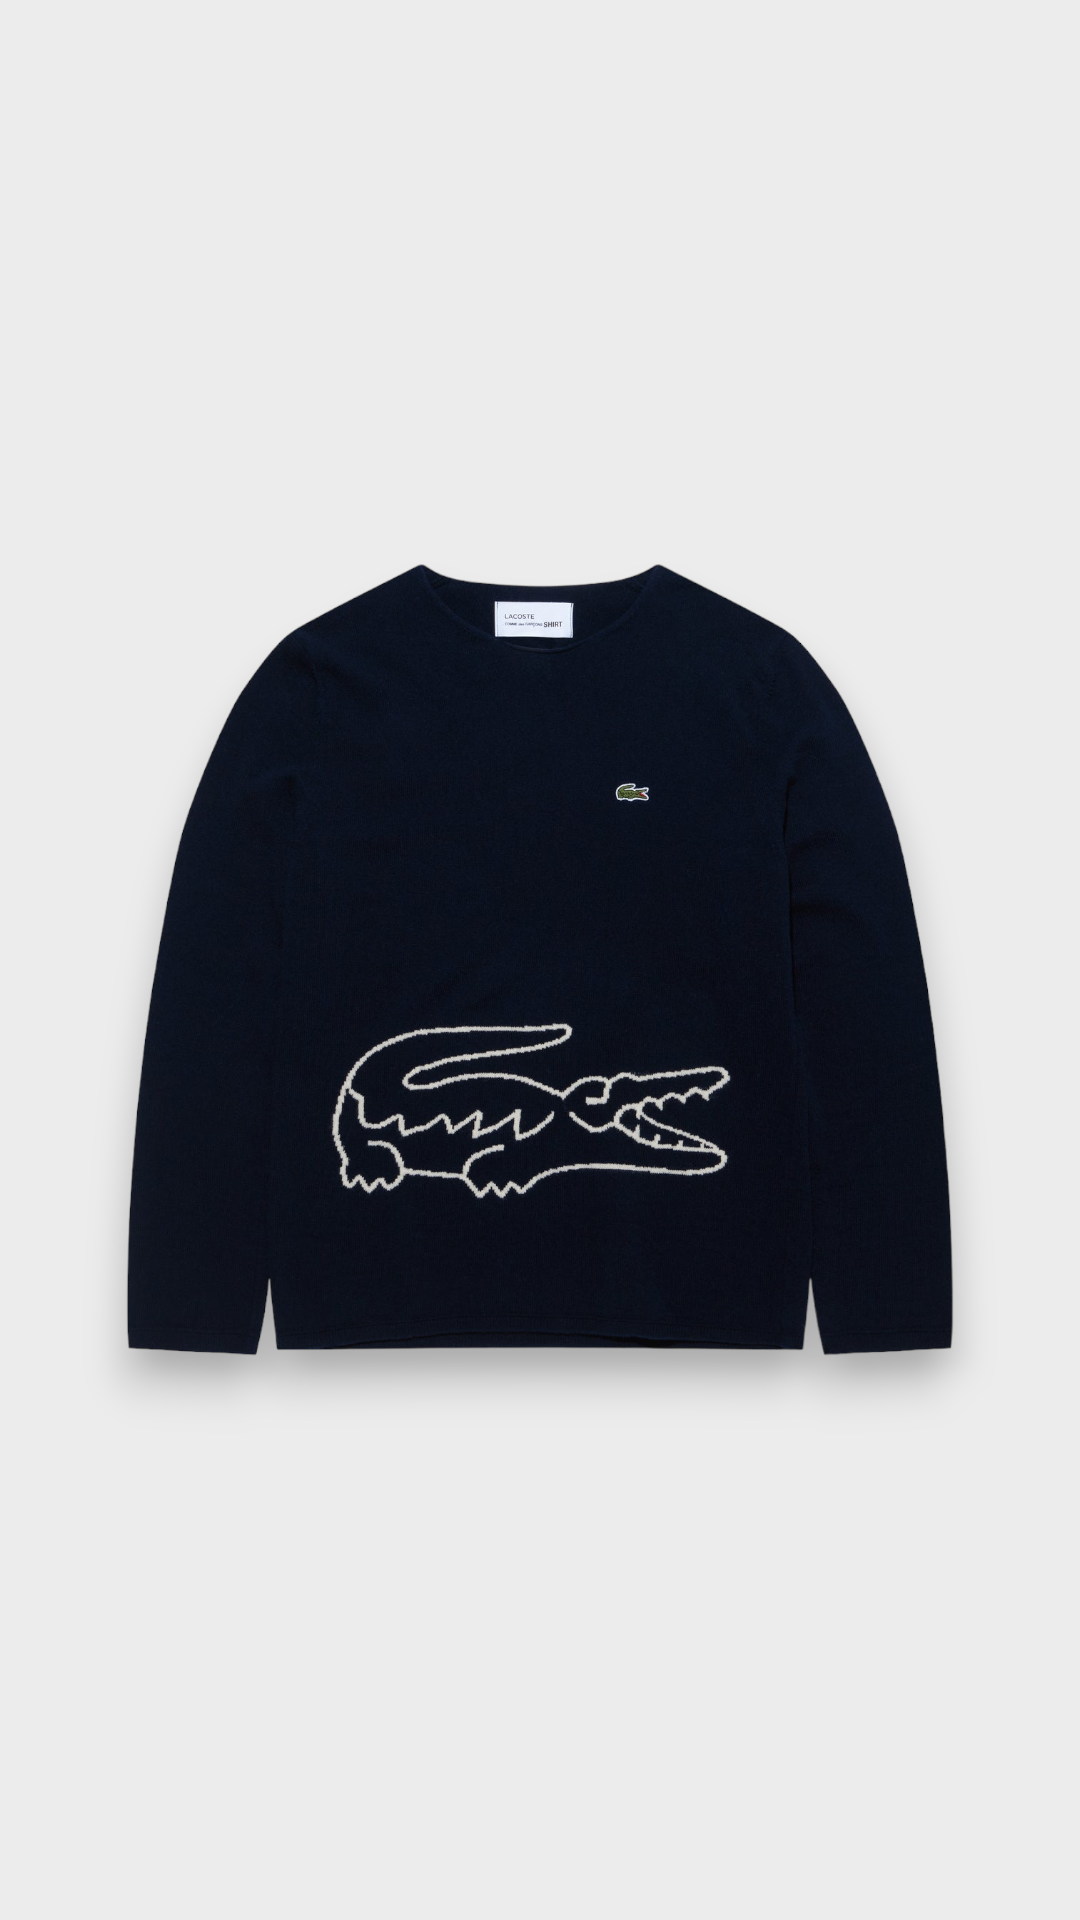 CDG Shirt x Lacoste / Men's Knit Sweater